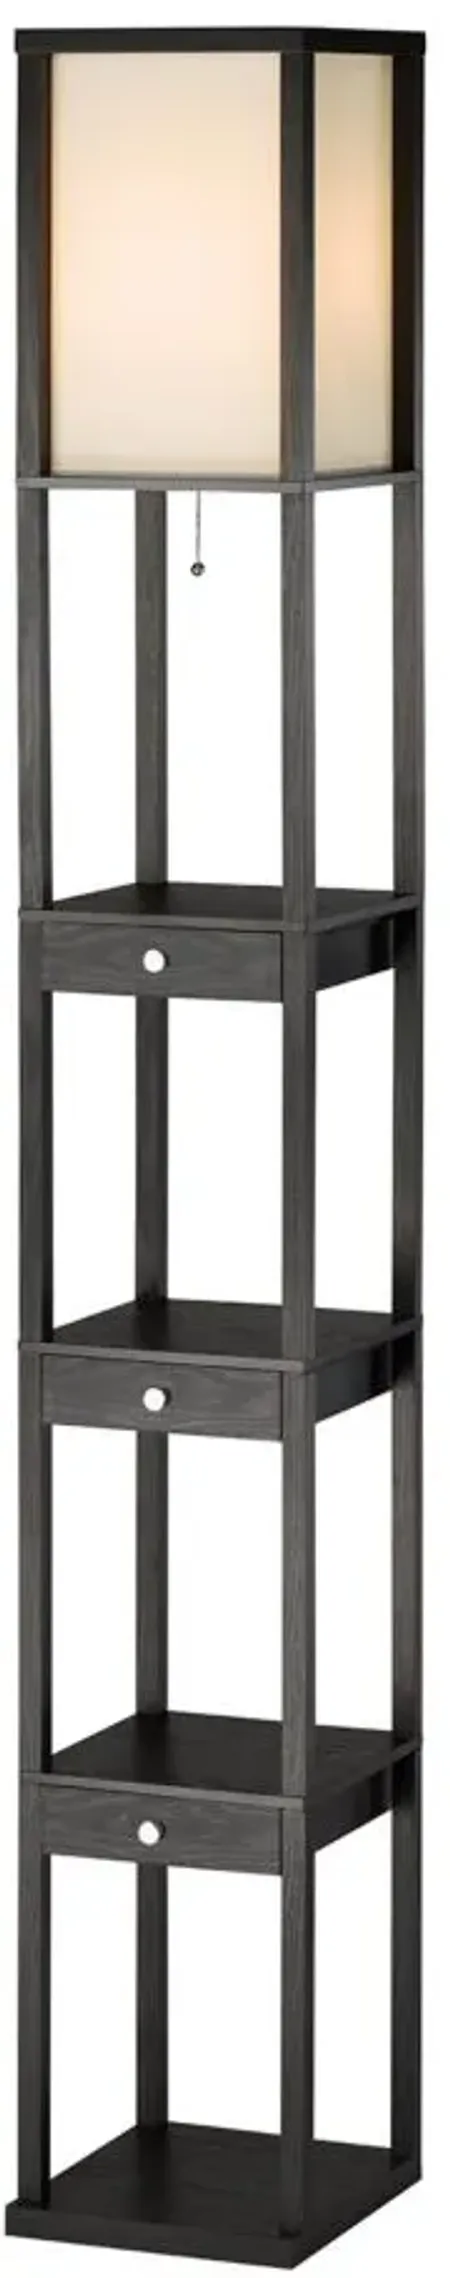 Murray Three Drawer Shelf Lamp in Black by Adesso Inc